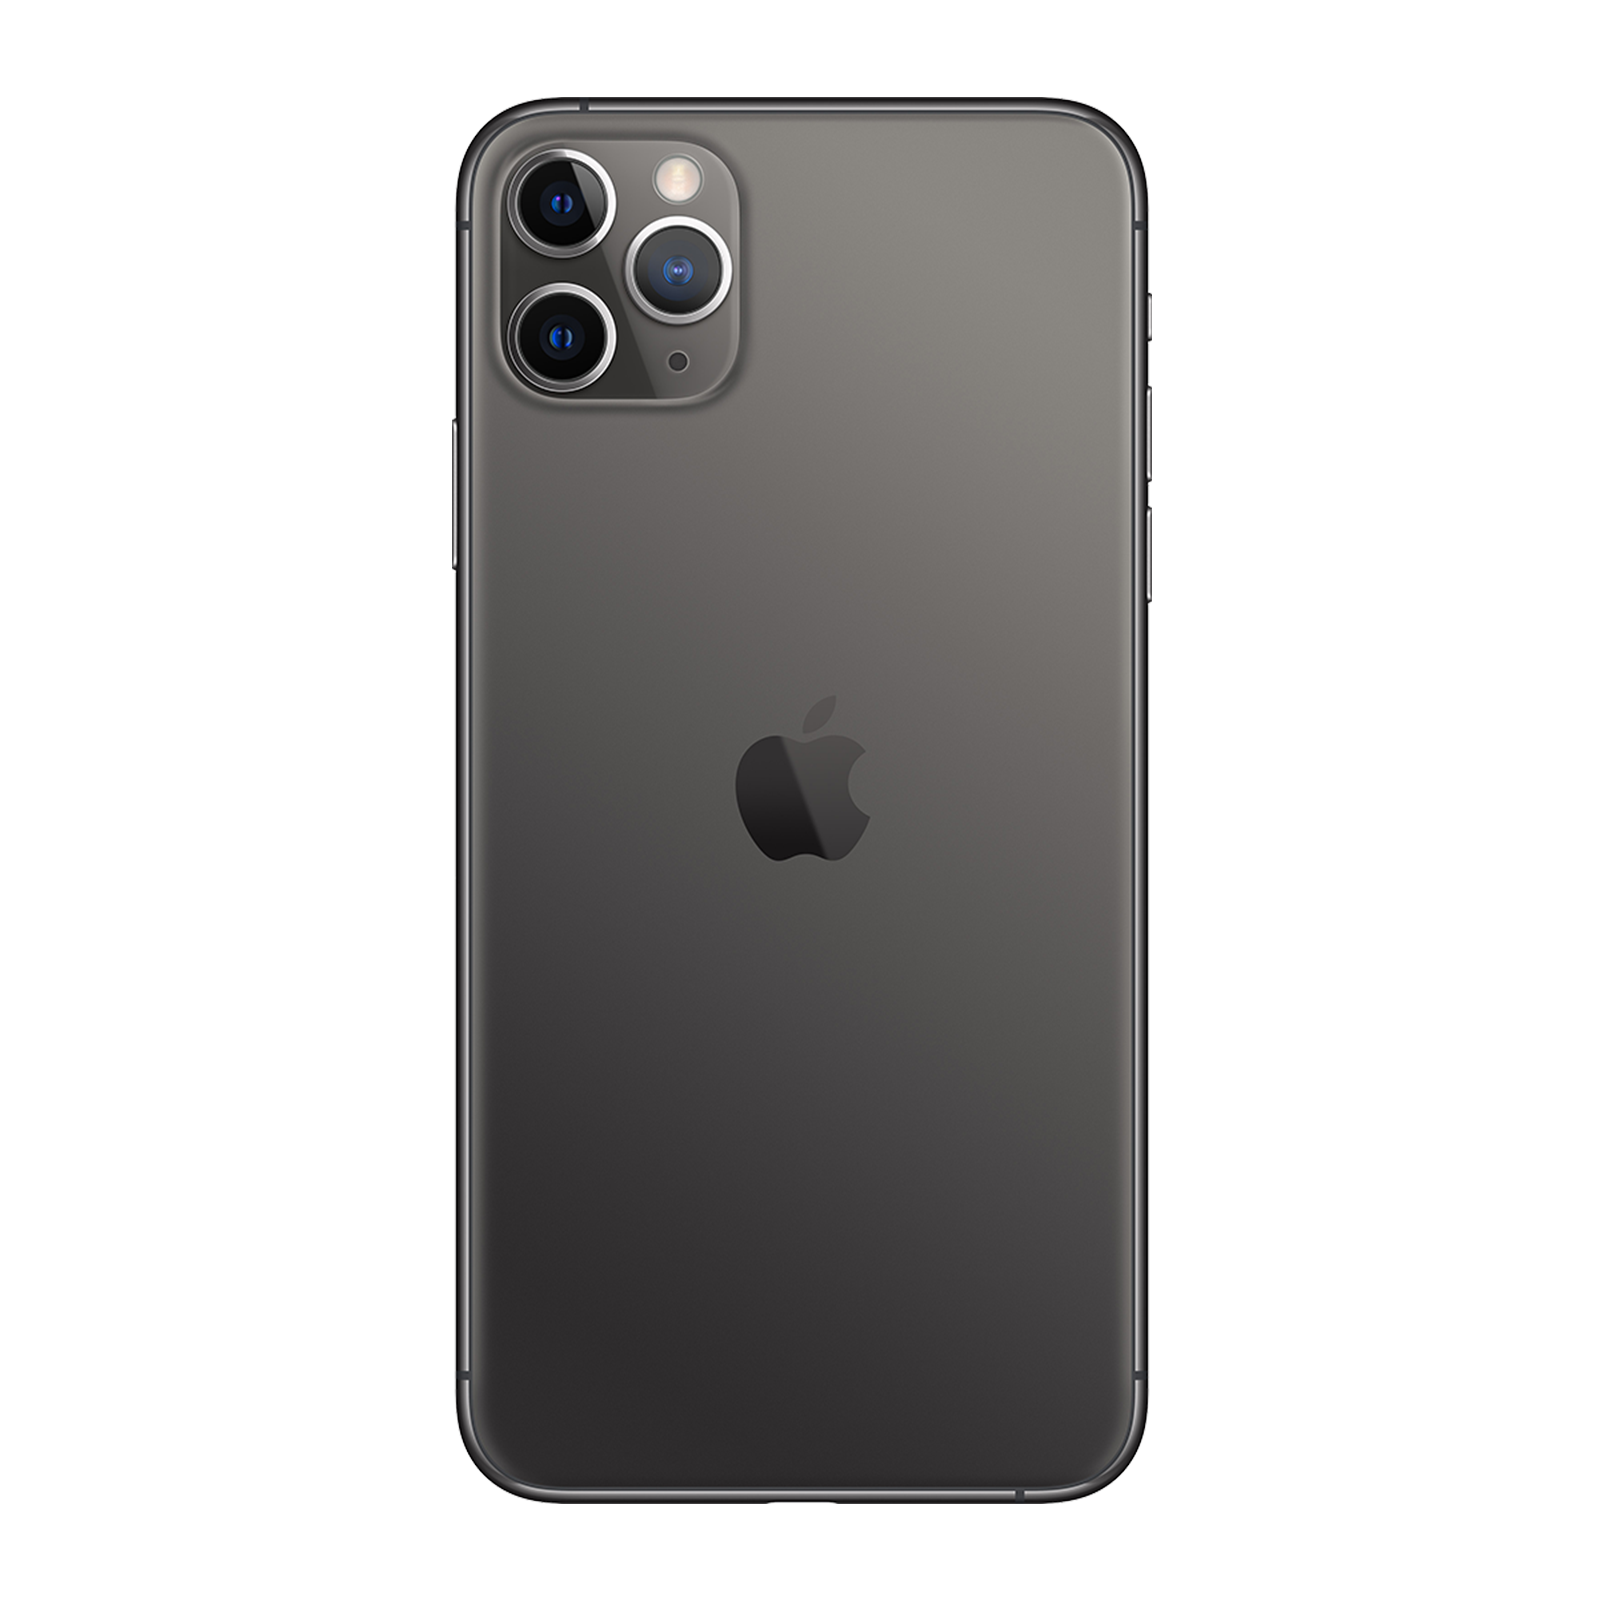 Apple iPhone 11 Pro Max 256GB Space Grey Good - Unlocked